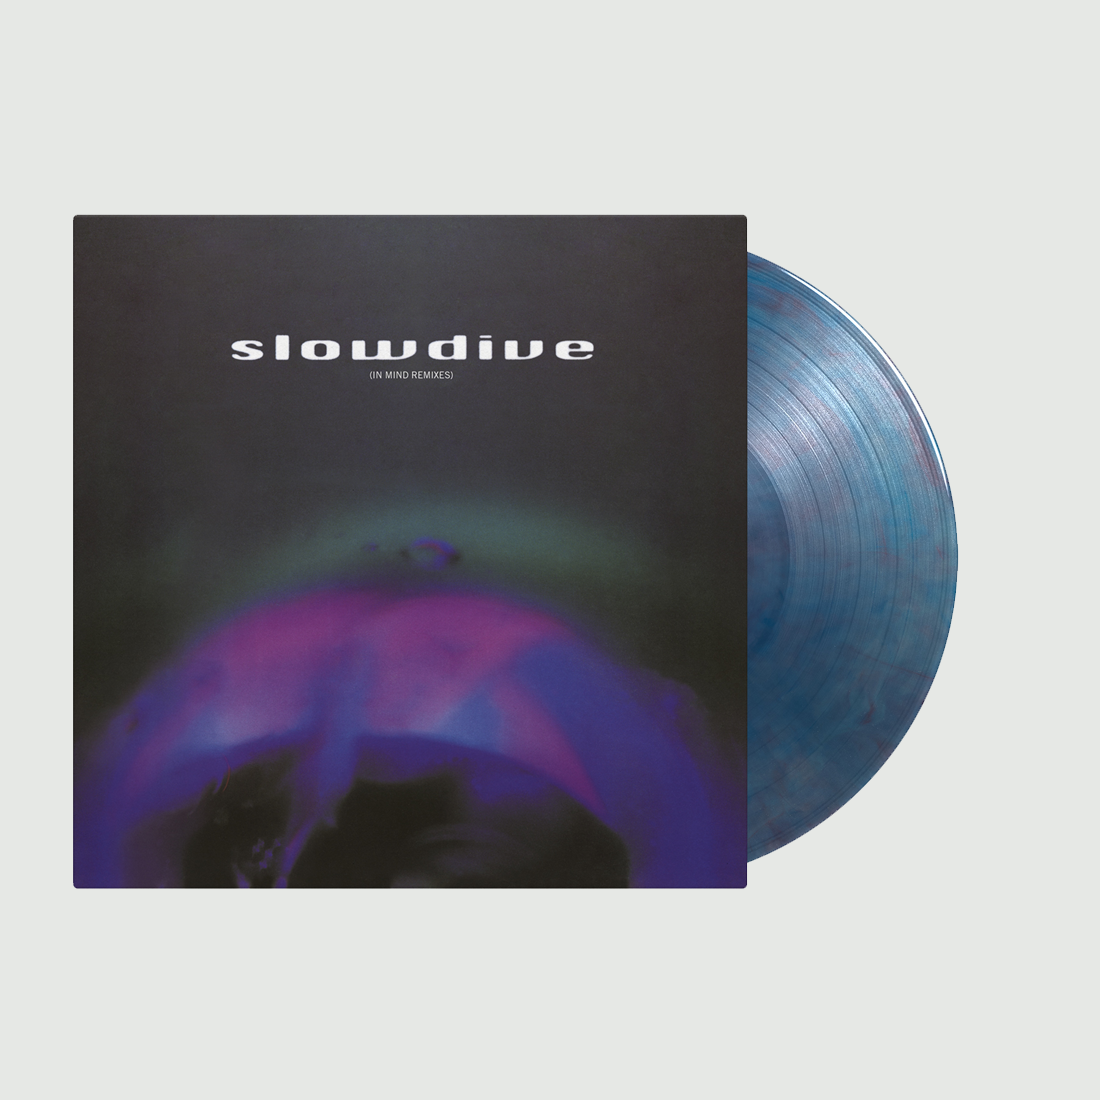 Slowdive — 5 EP (In Mind Remixes)